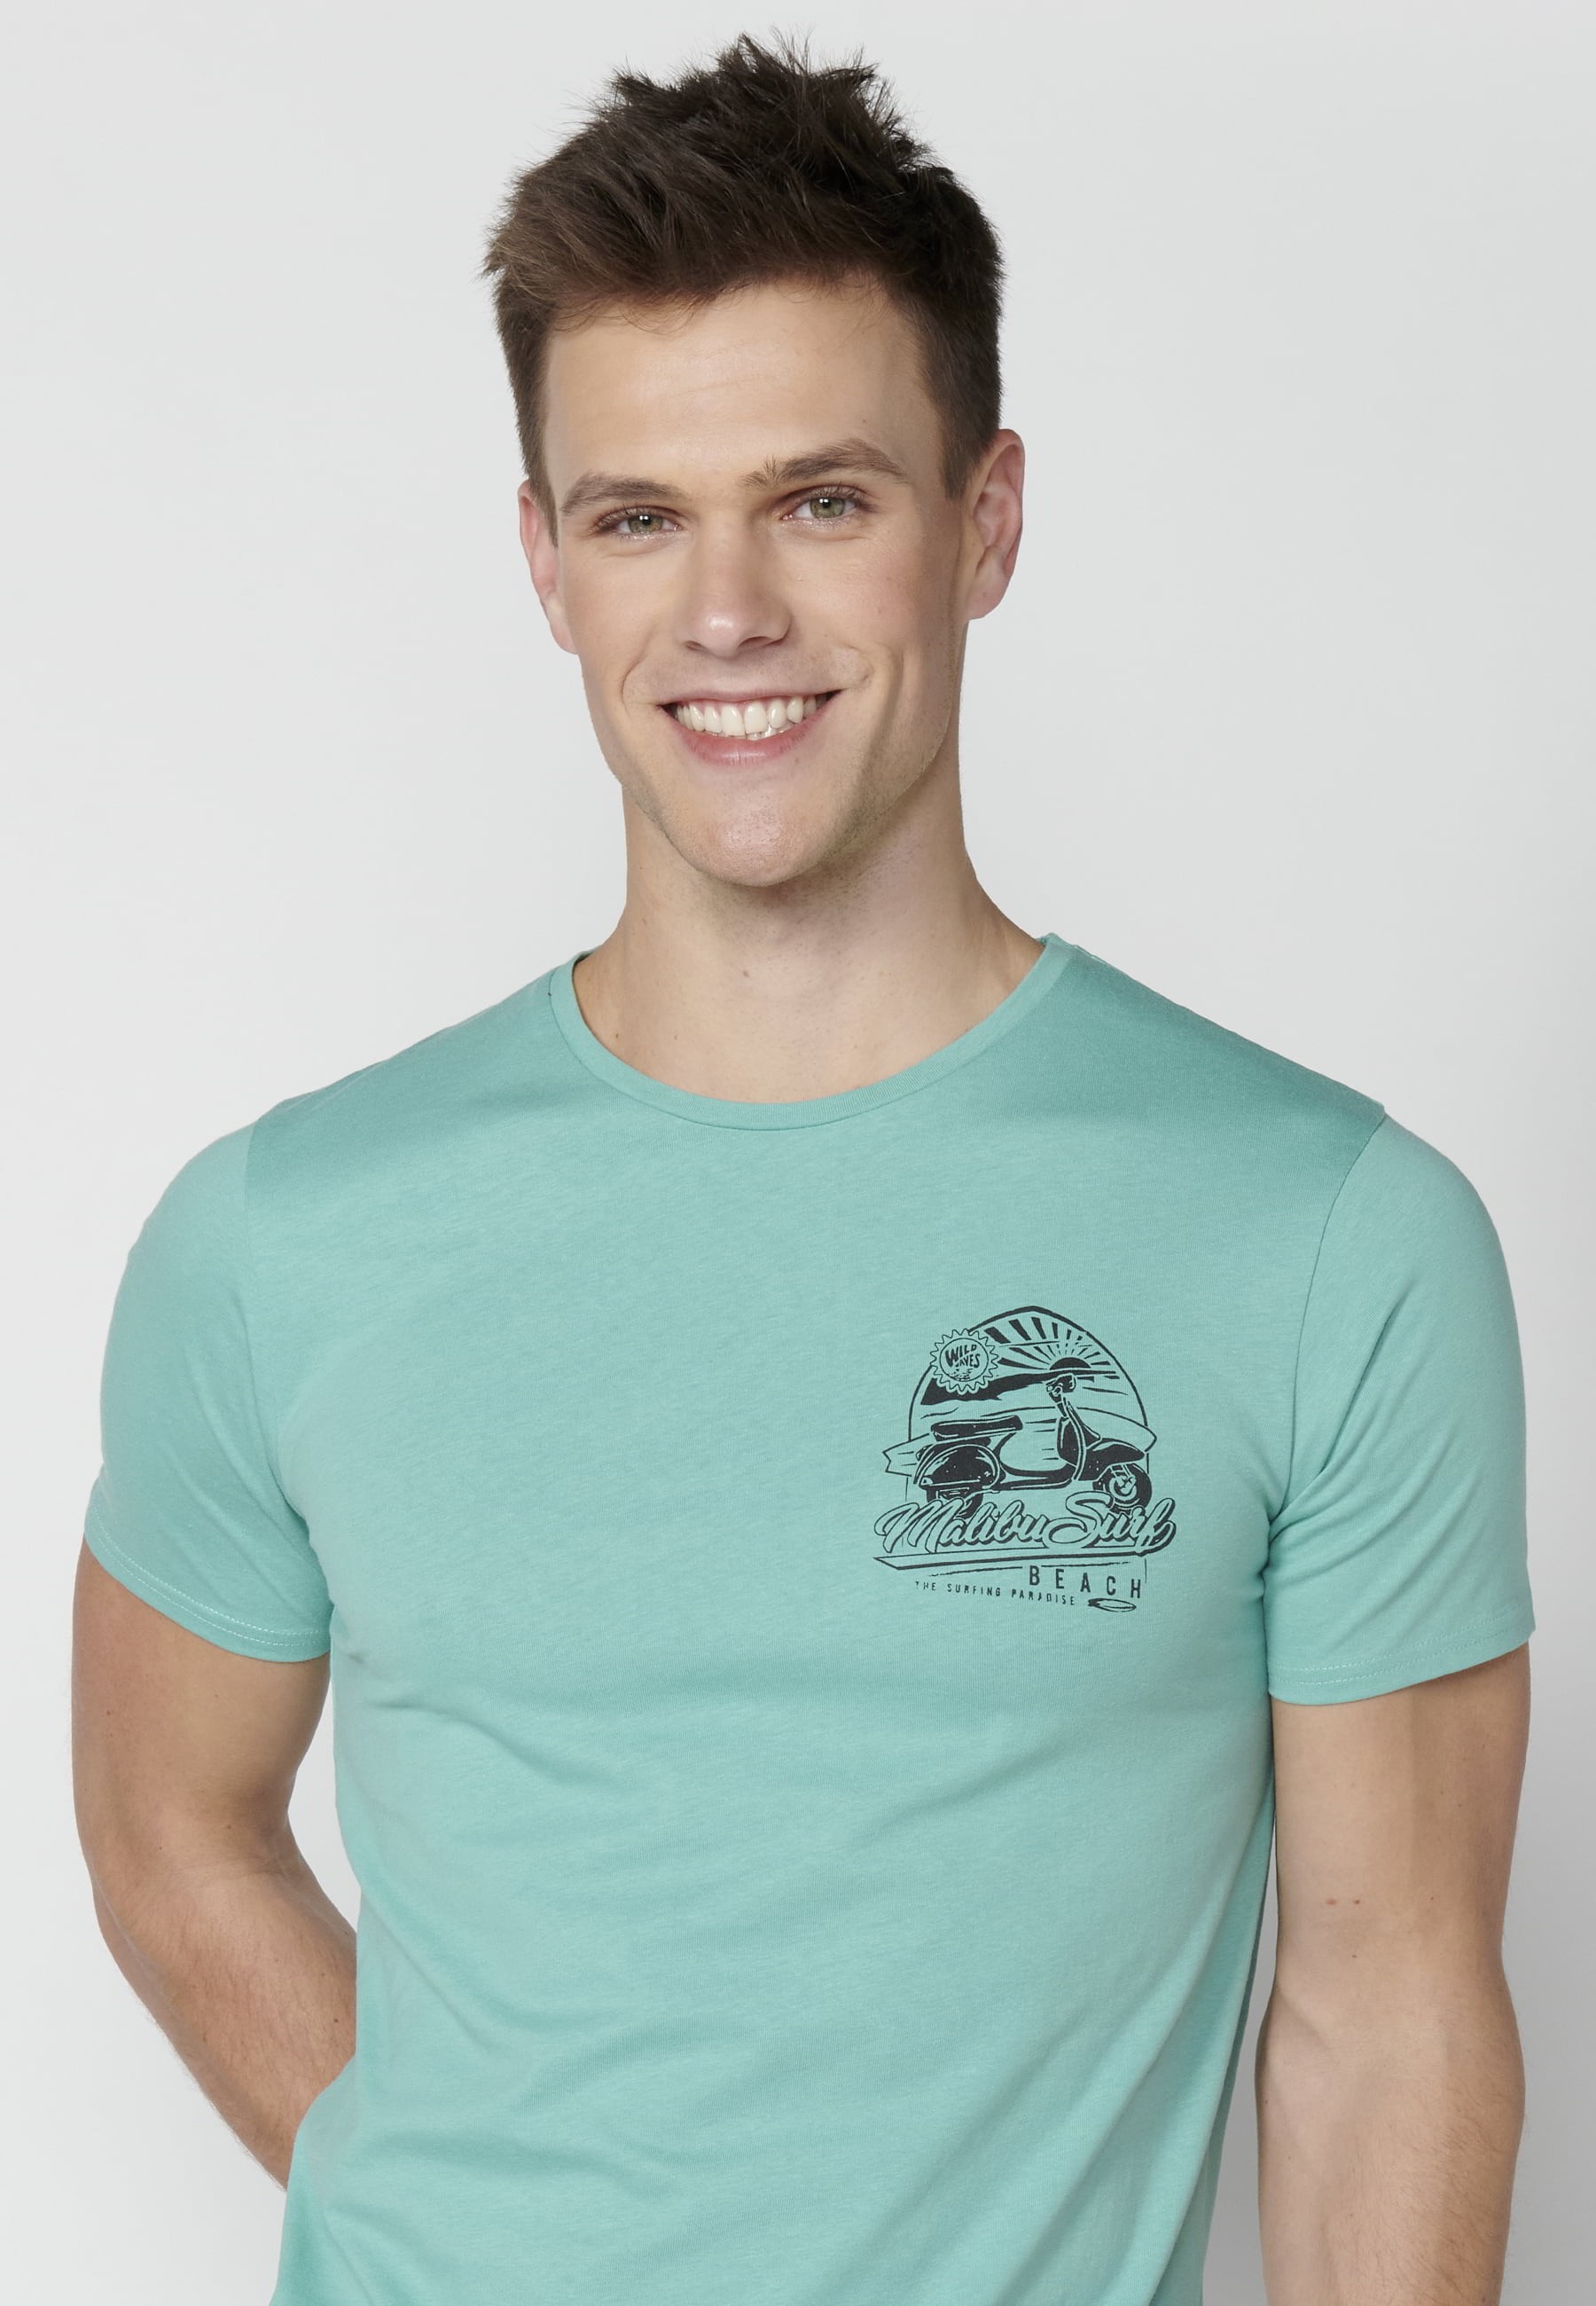 Camiseta de manga corta de Algodón color Menta para Hombre